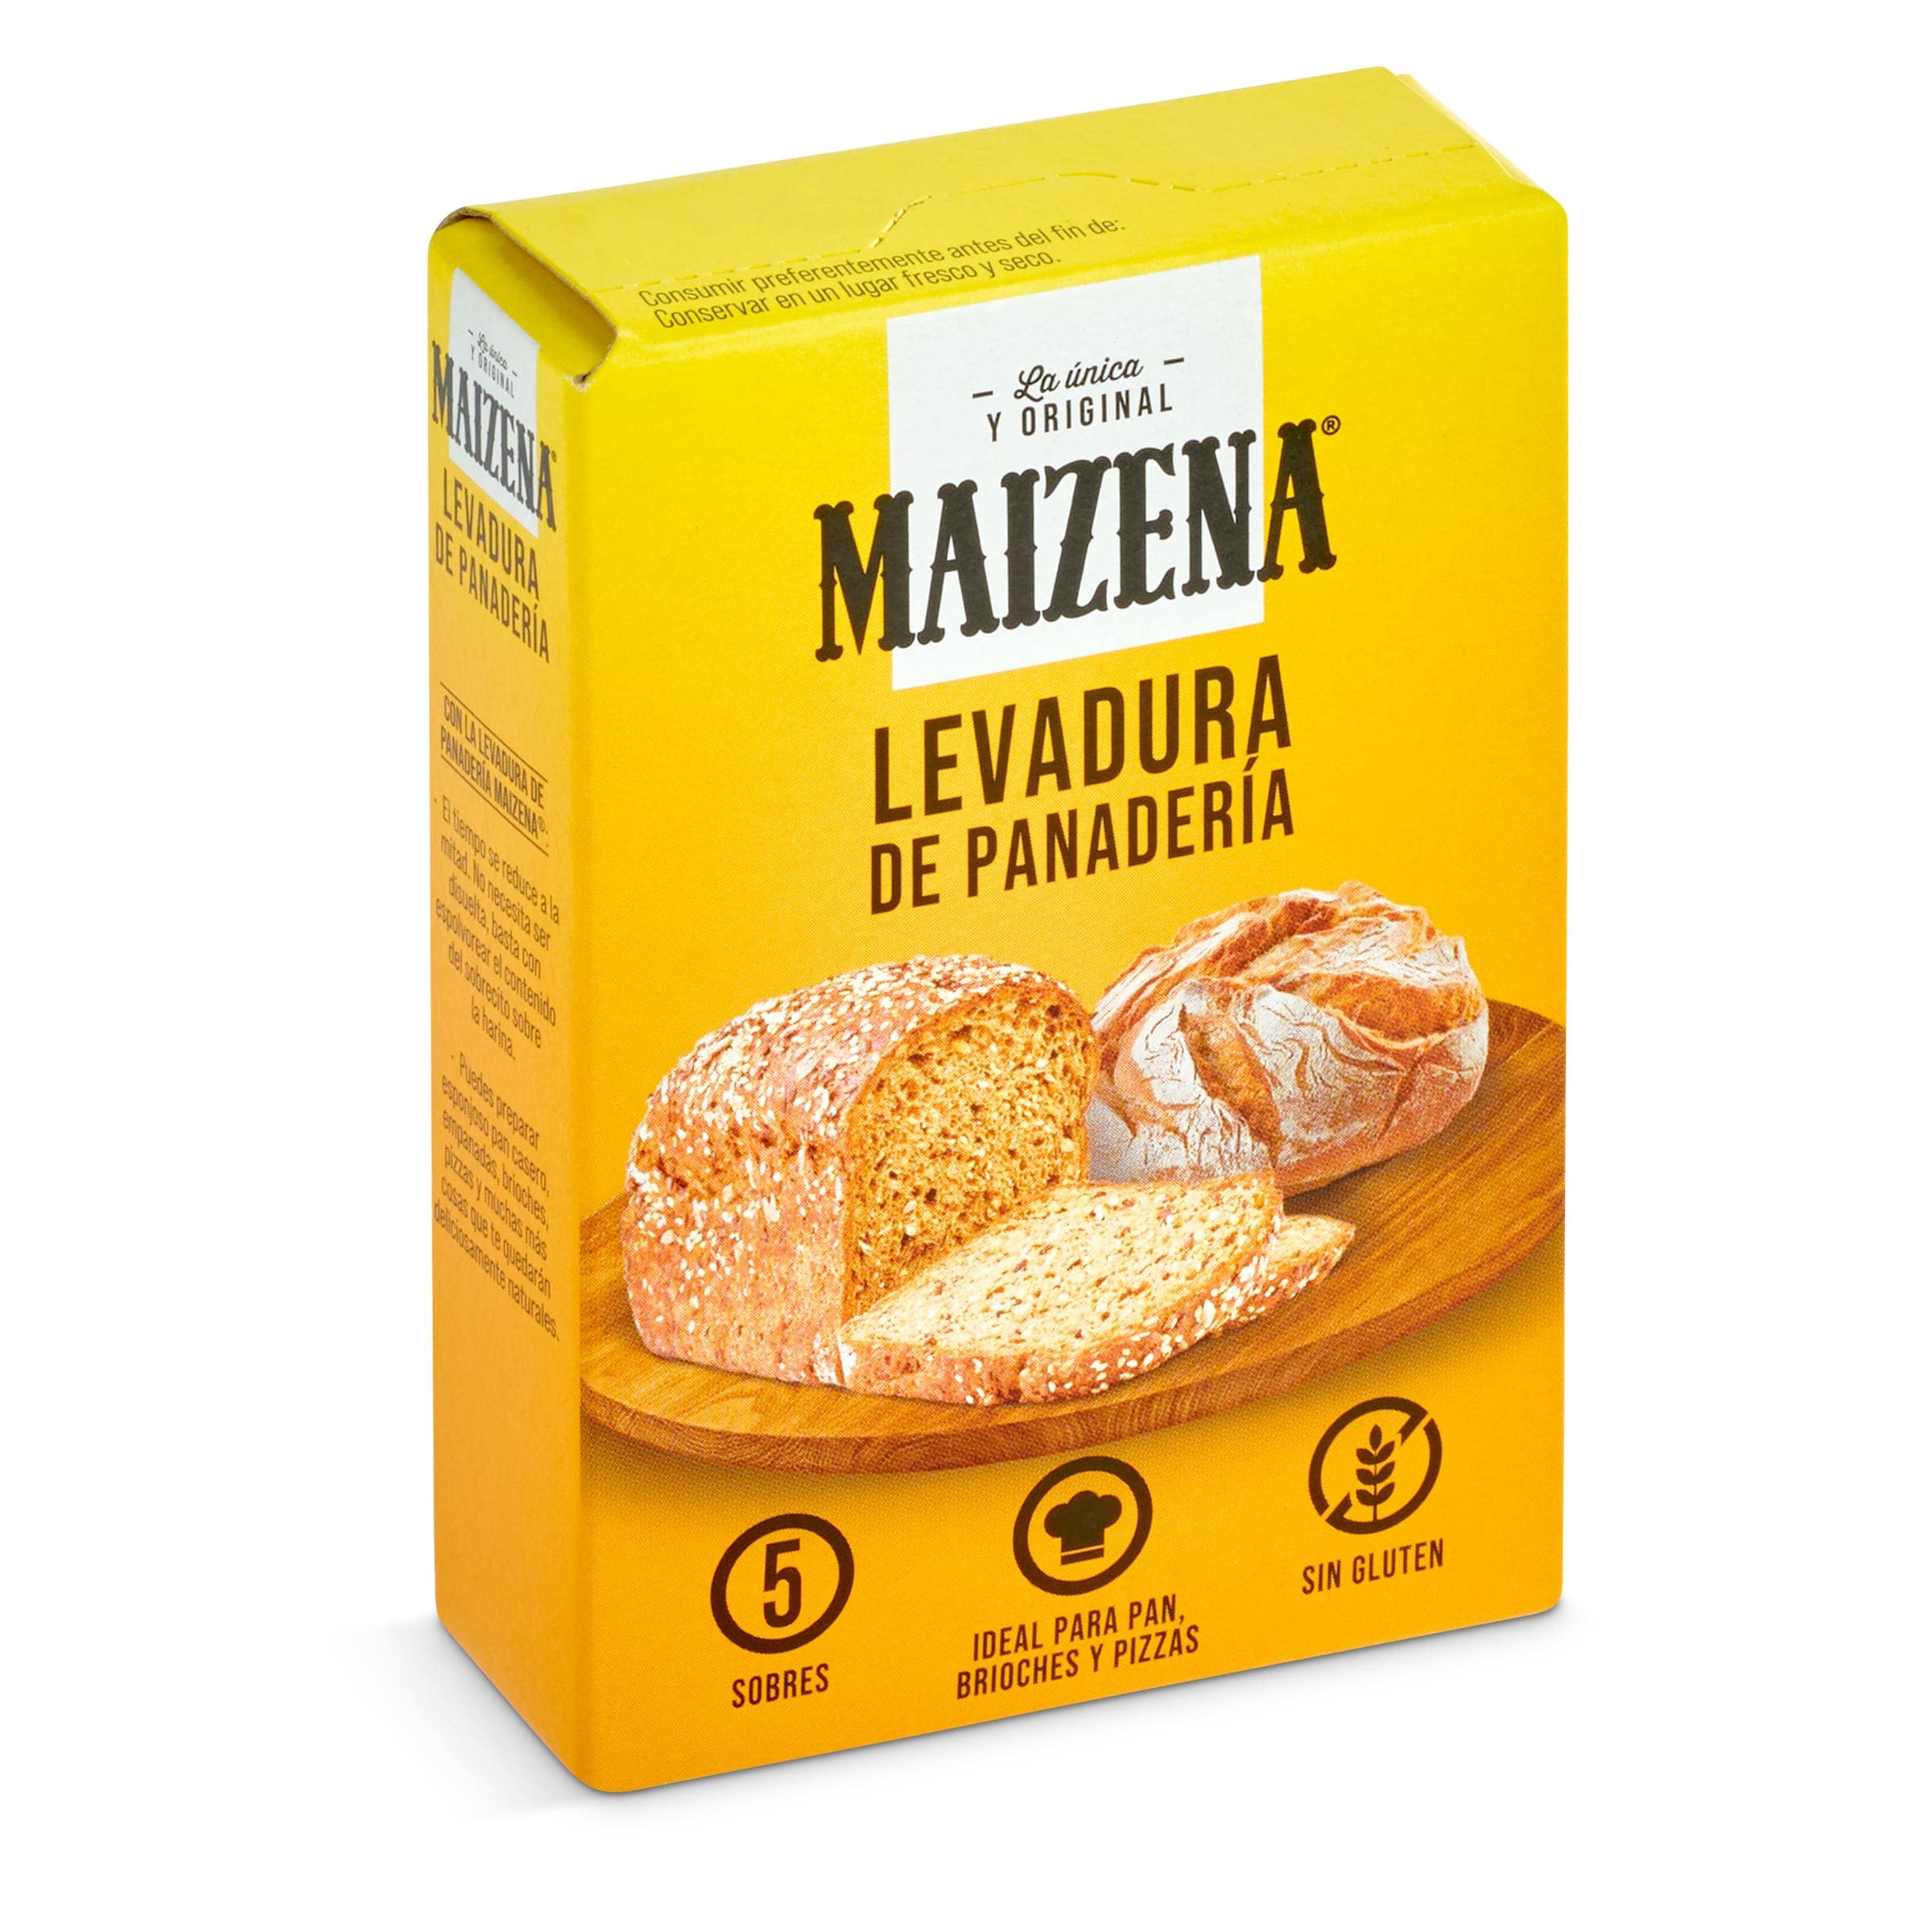 Levadura de panadería MAIZENA CAJA 28 GR - Supermercados DIA